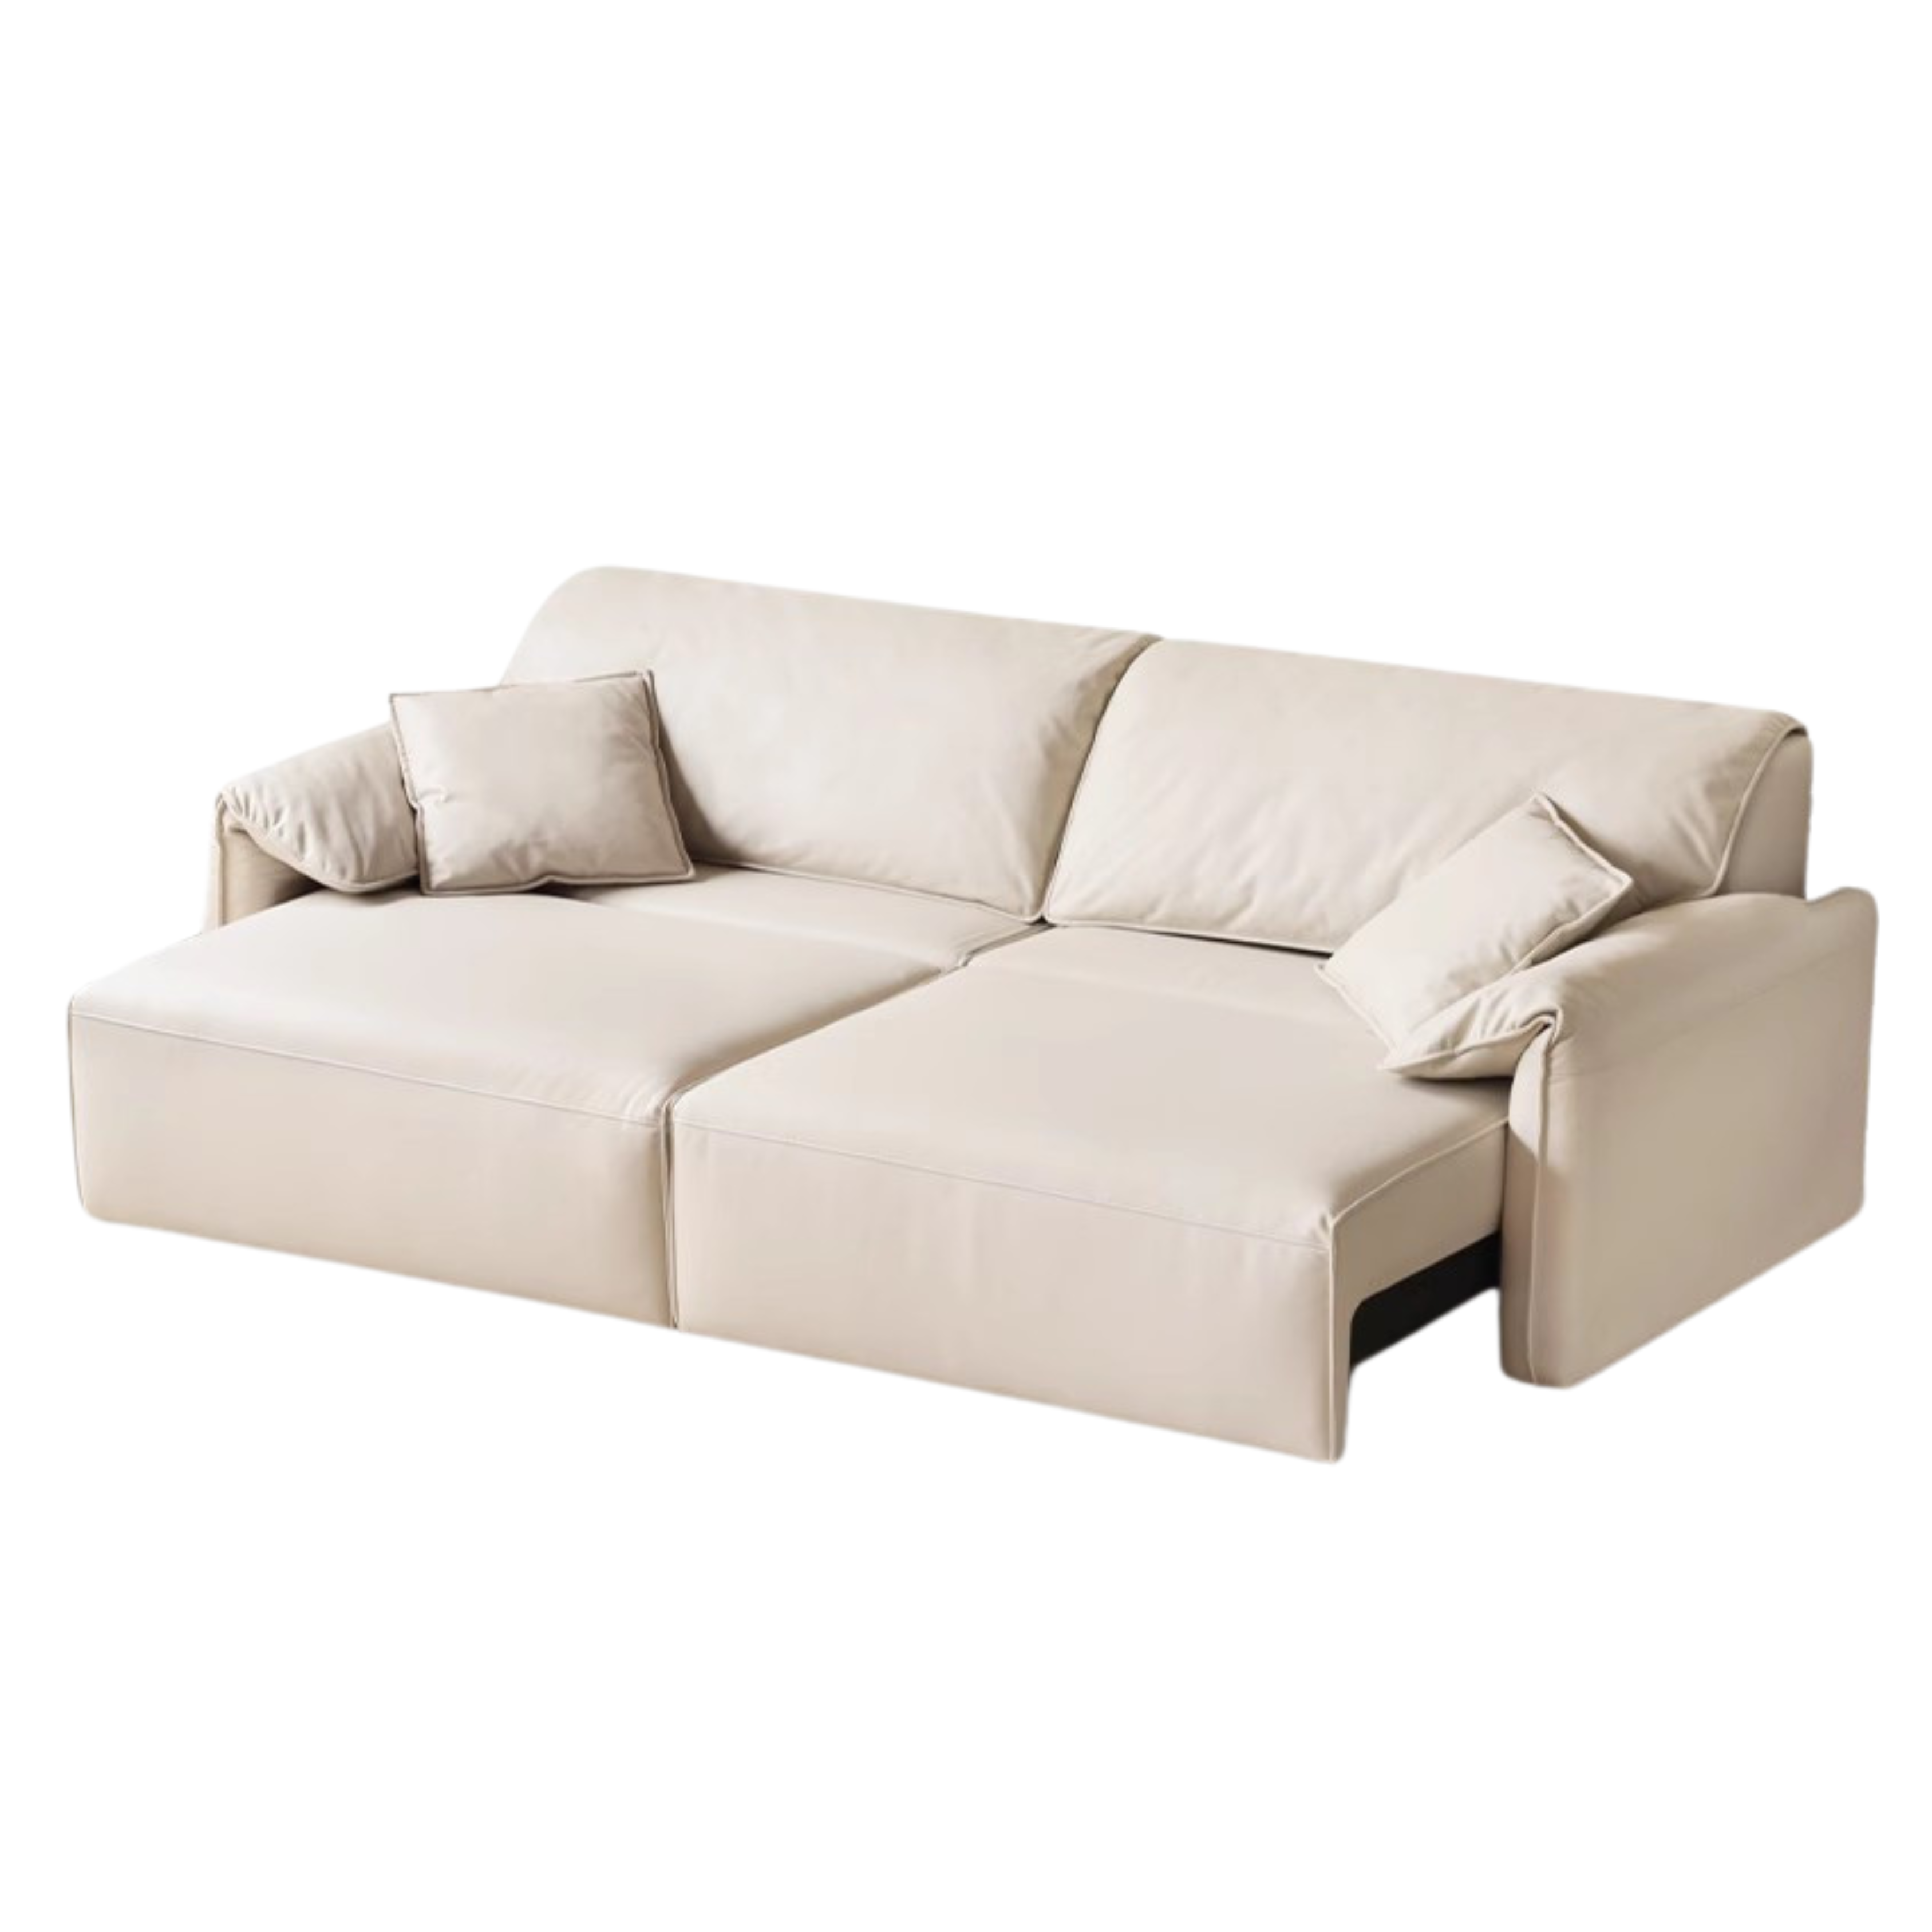 Electric sofa bed foldable dual-purpose cream style white elephant ear retractable sofa